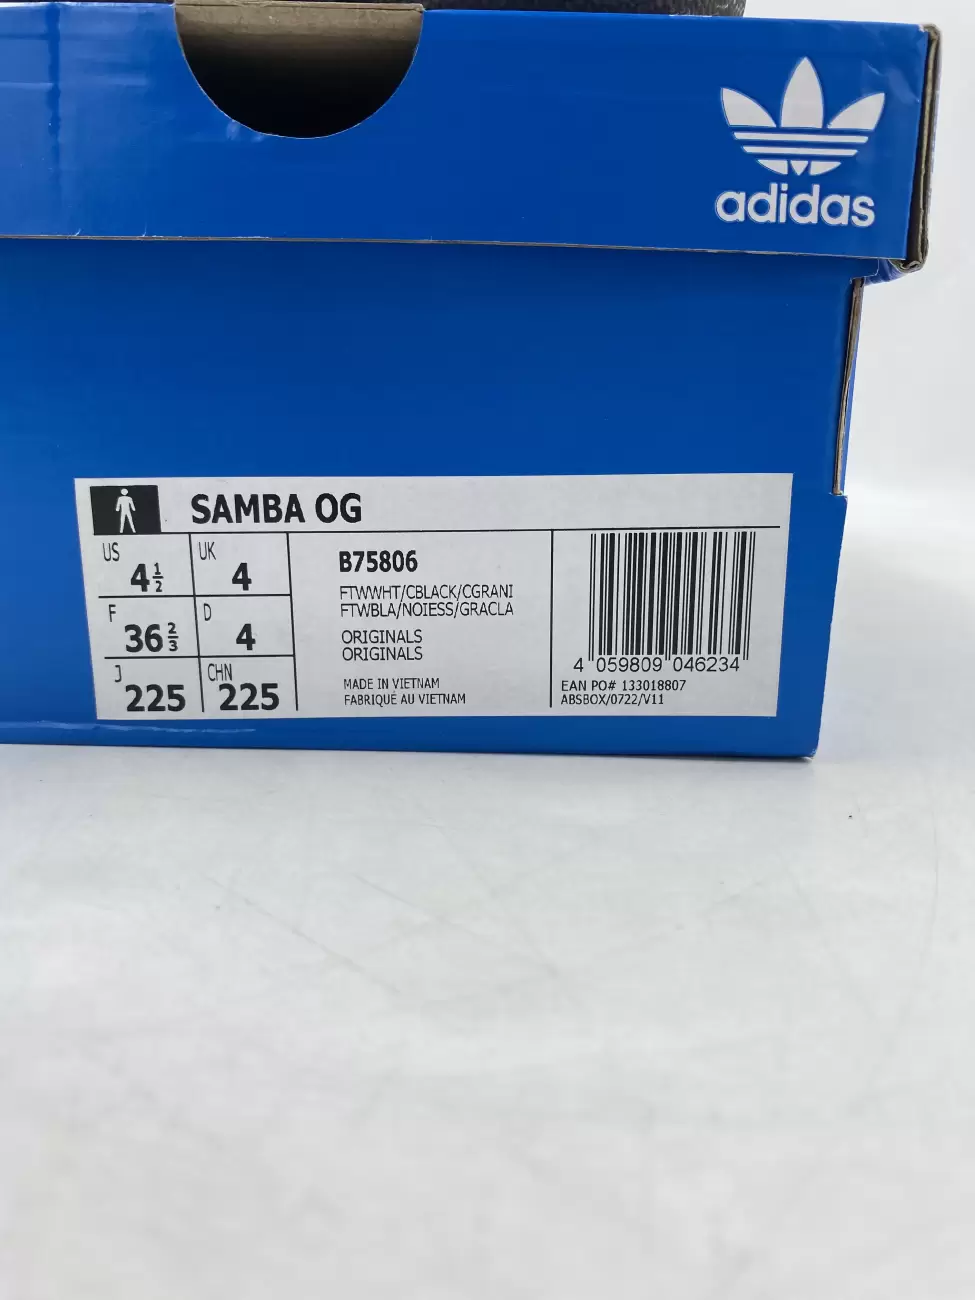 40347 - Adidas Samba OG Cloud White Core Black | Item Details - AfterMarket